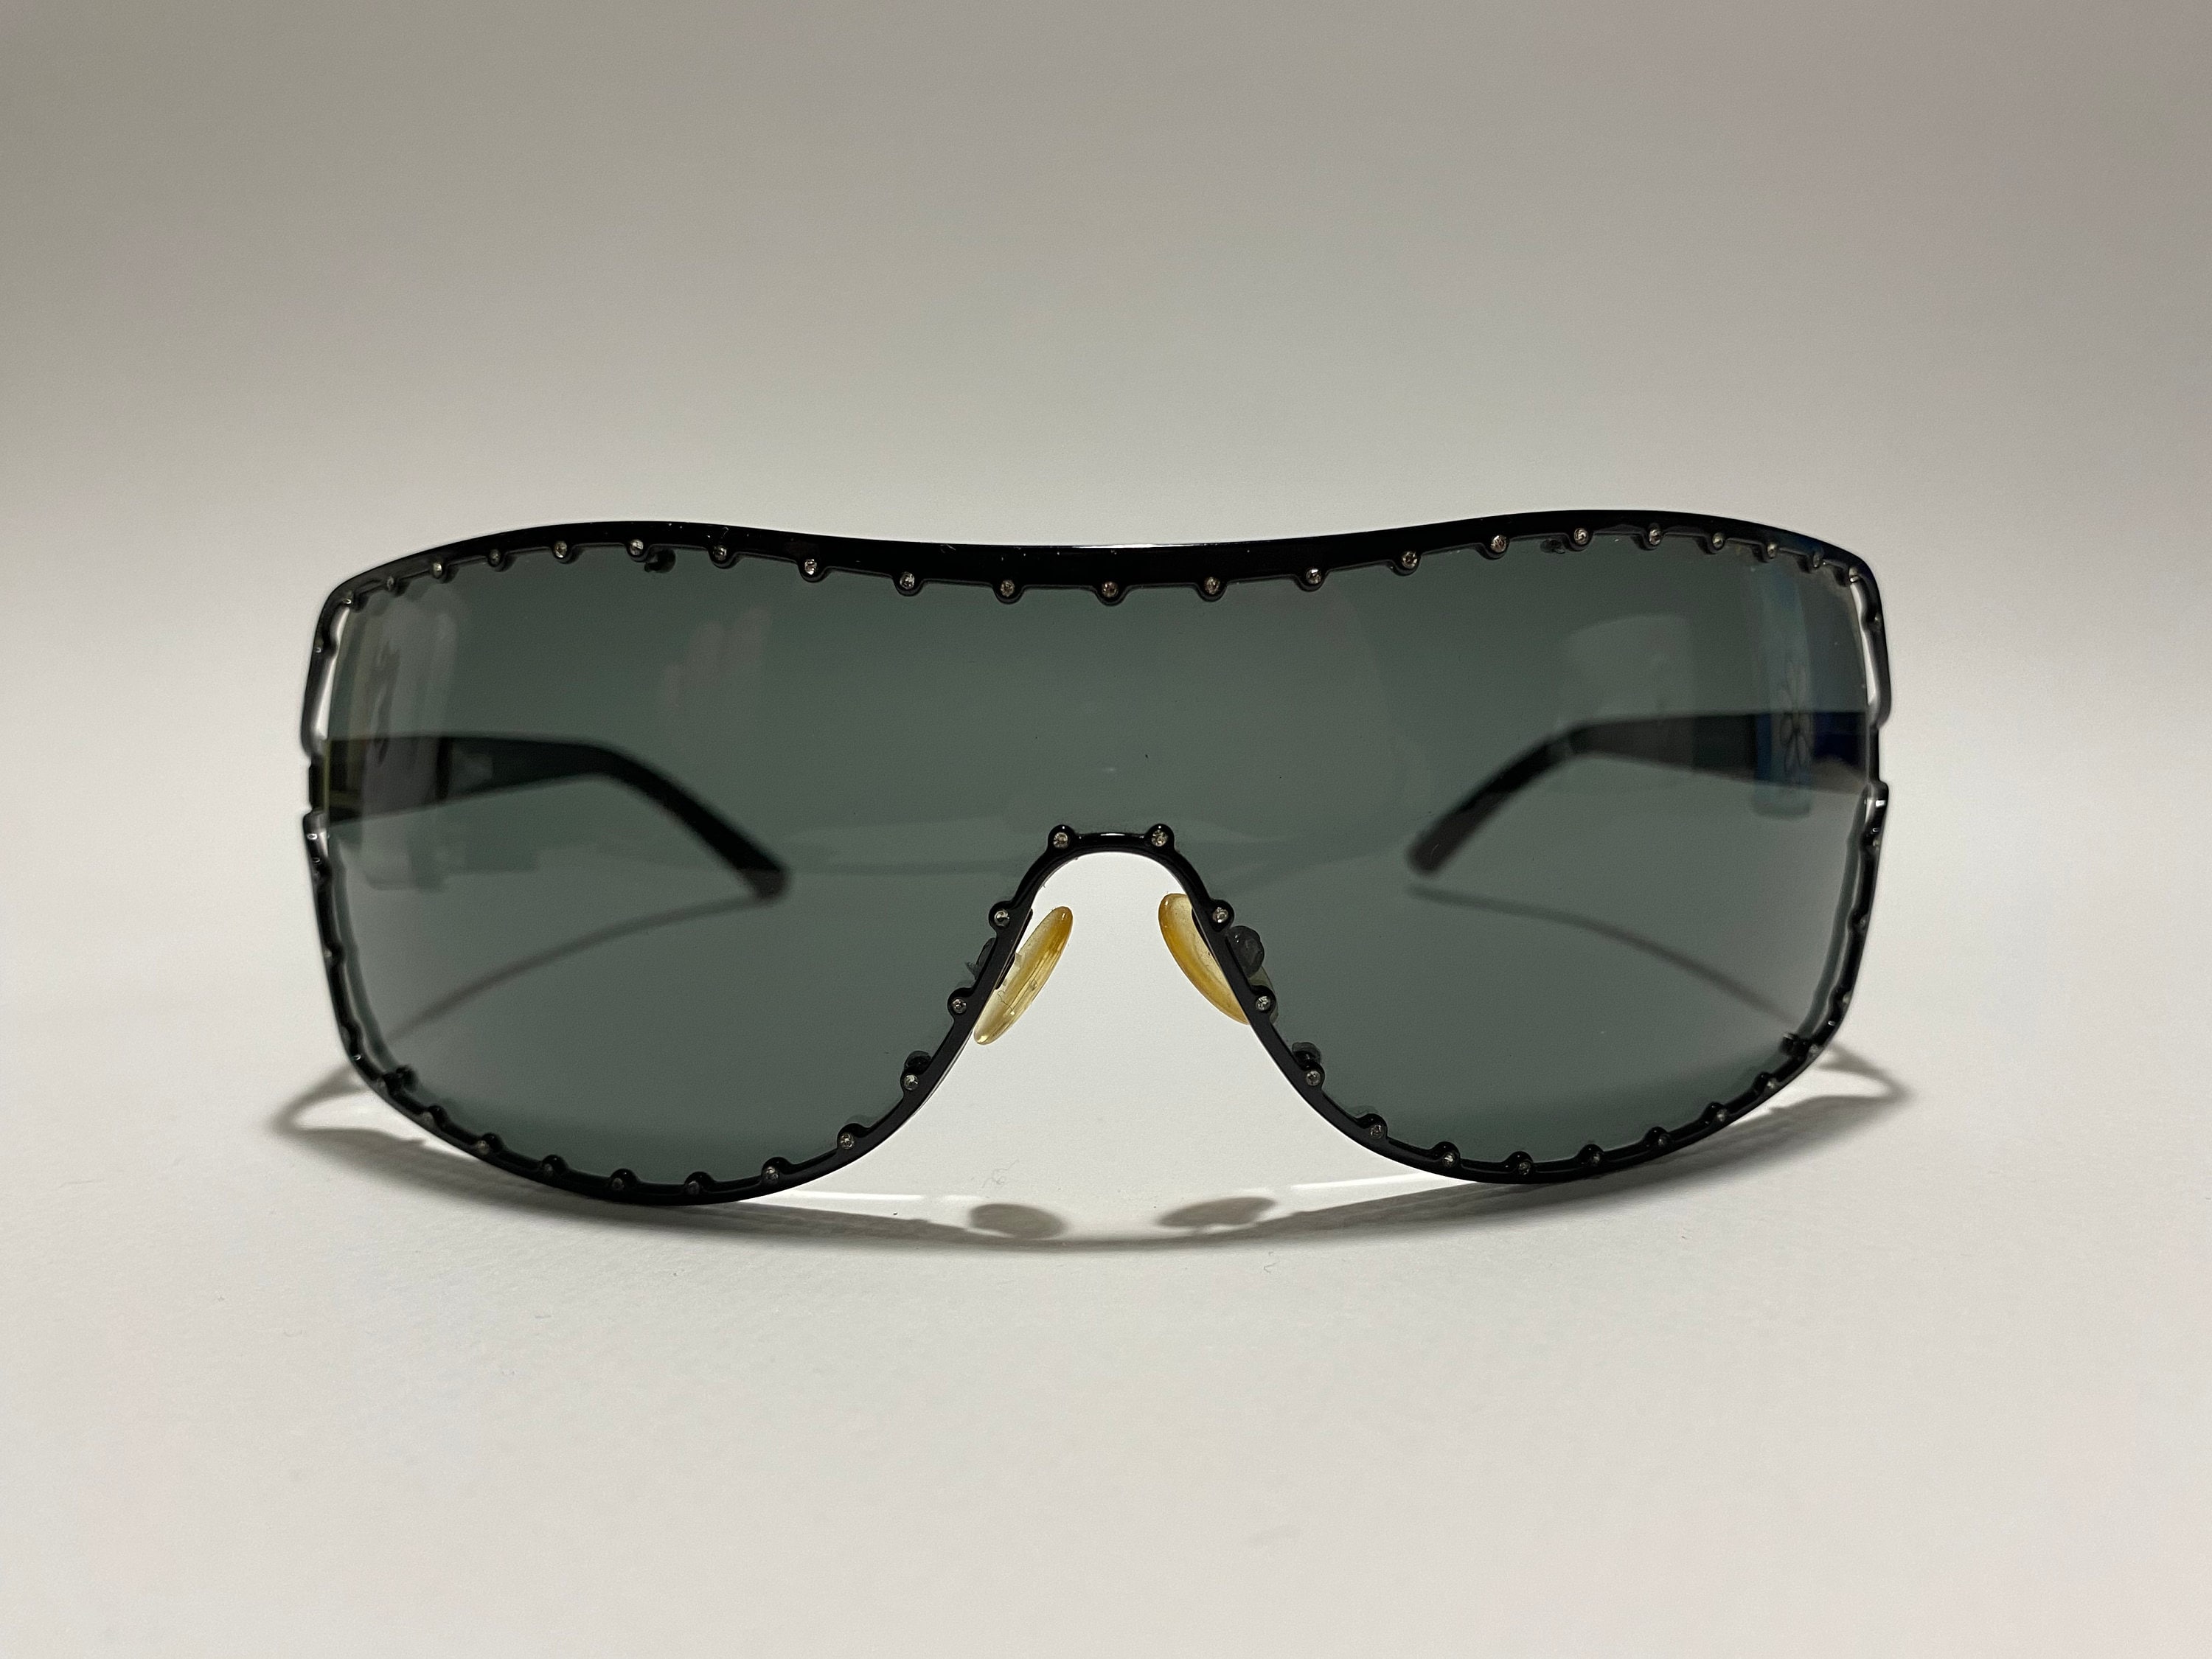 Chanel Black Acetate Frame Polarized Pantos Sunglasses - 5434